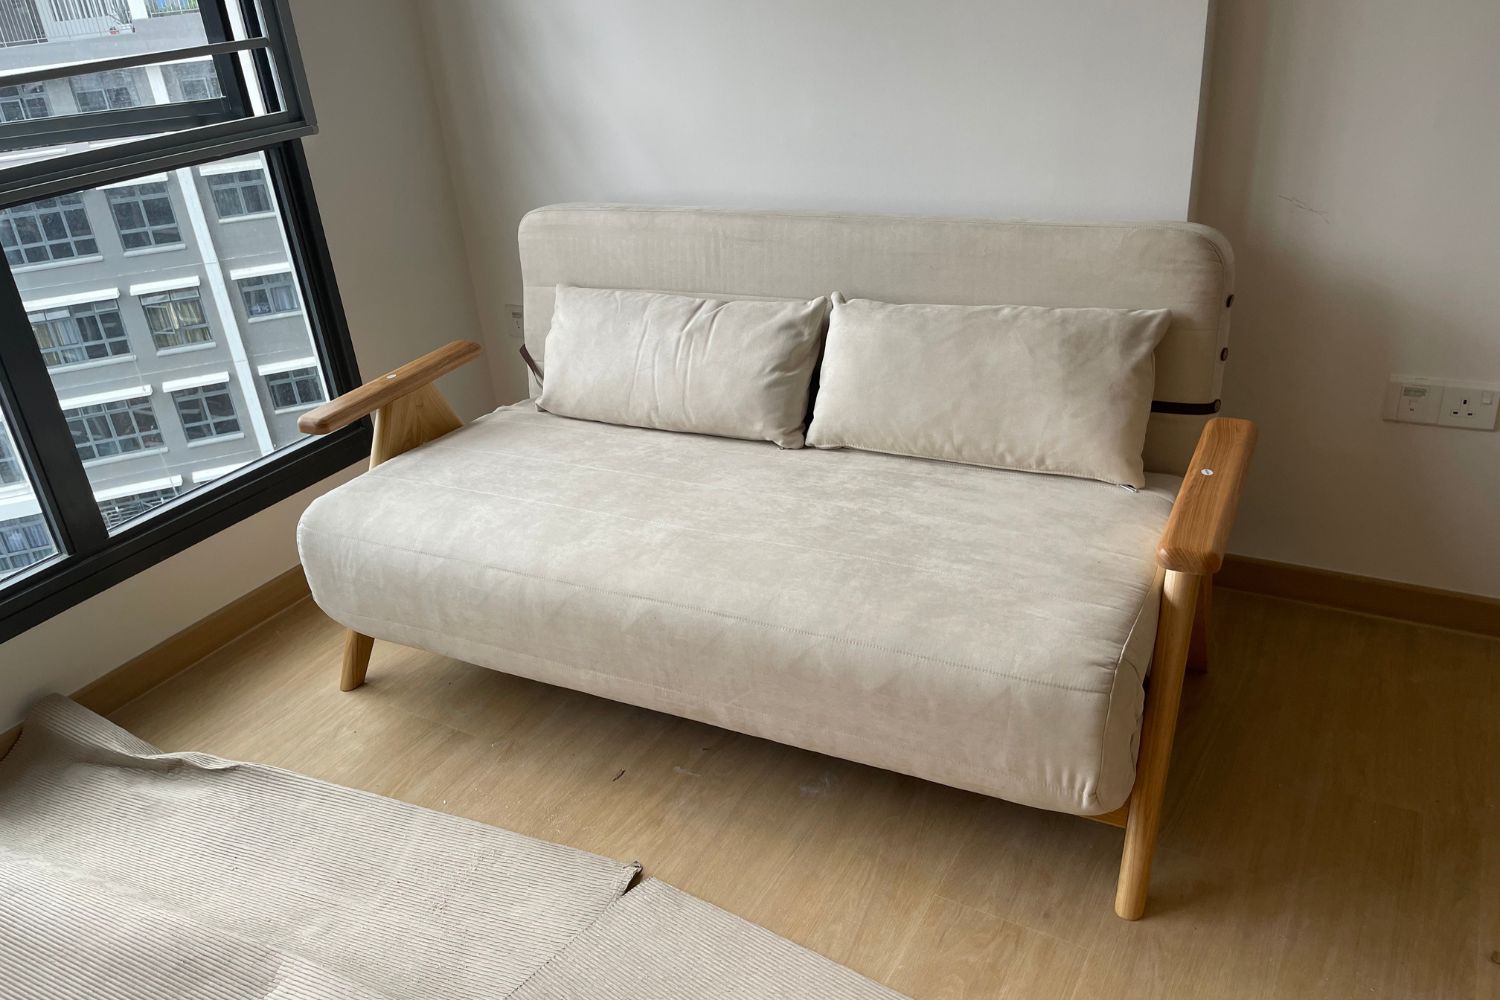 Corona 165cm white pet friendly fabric sofa bed in real customer homes